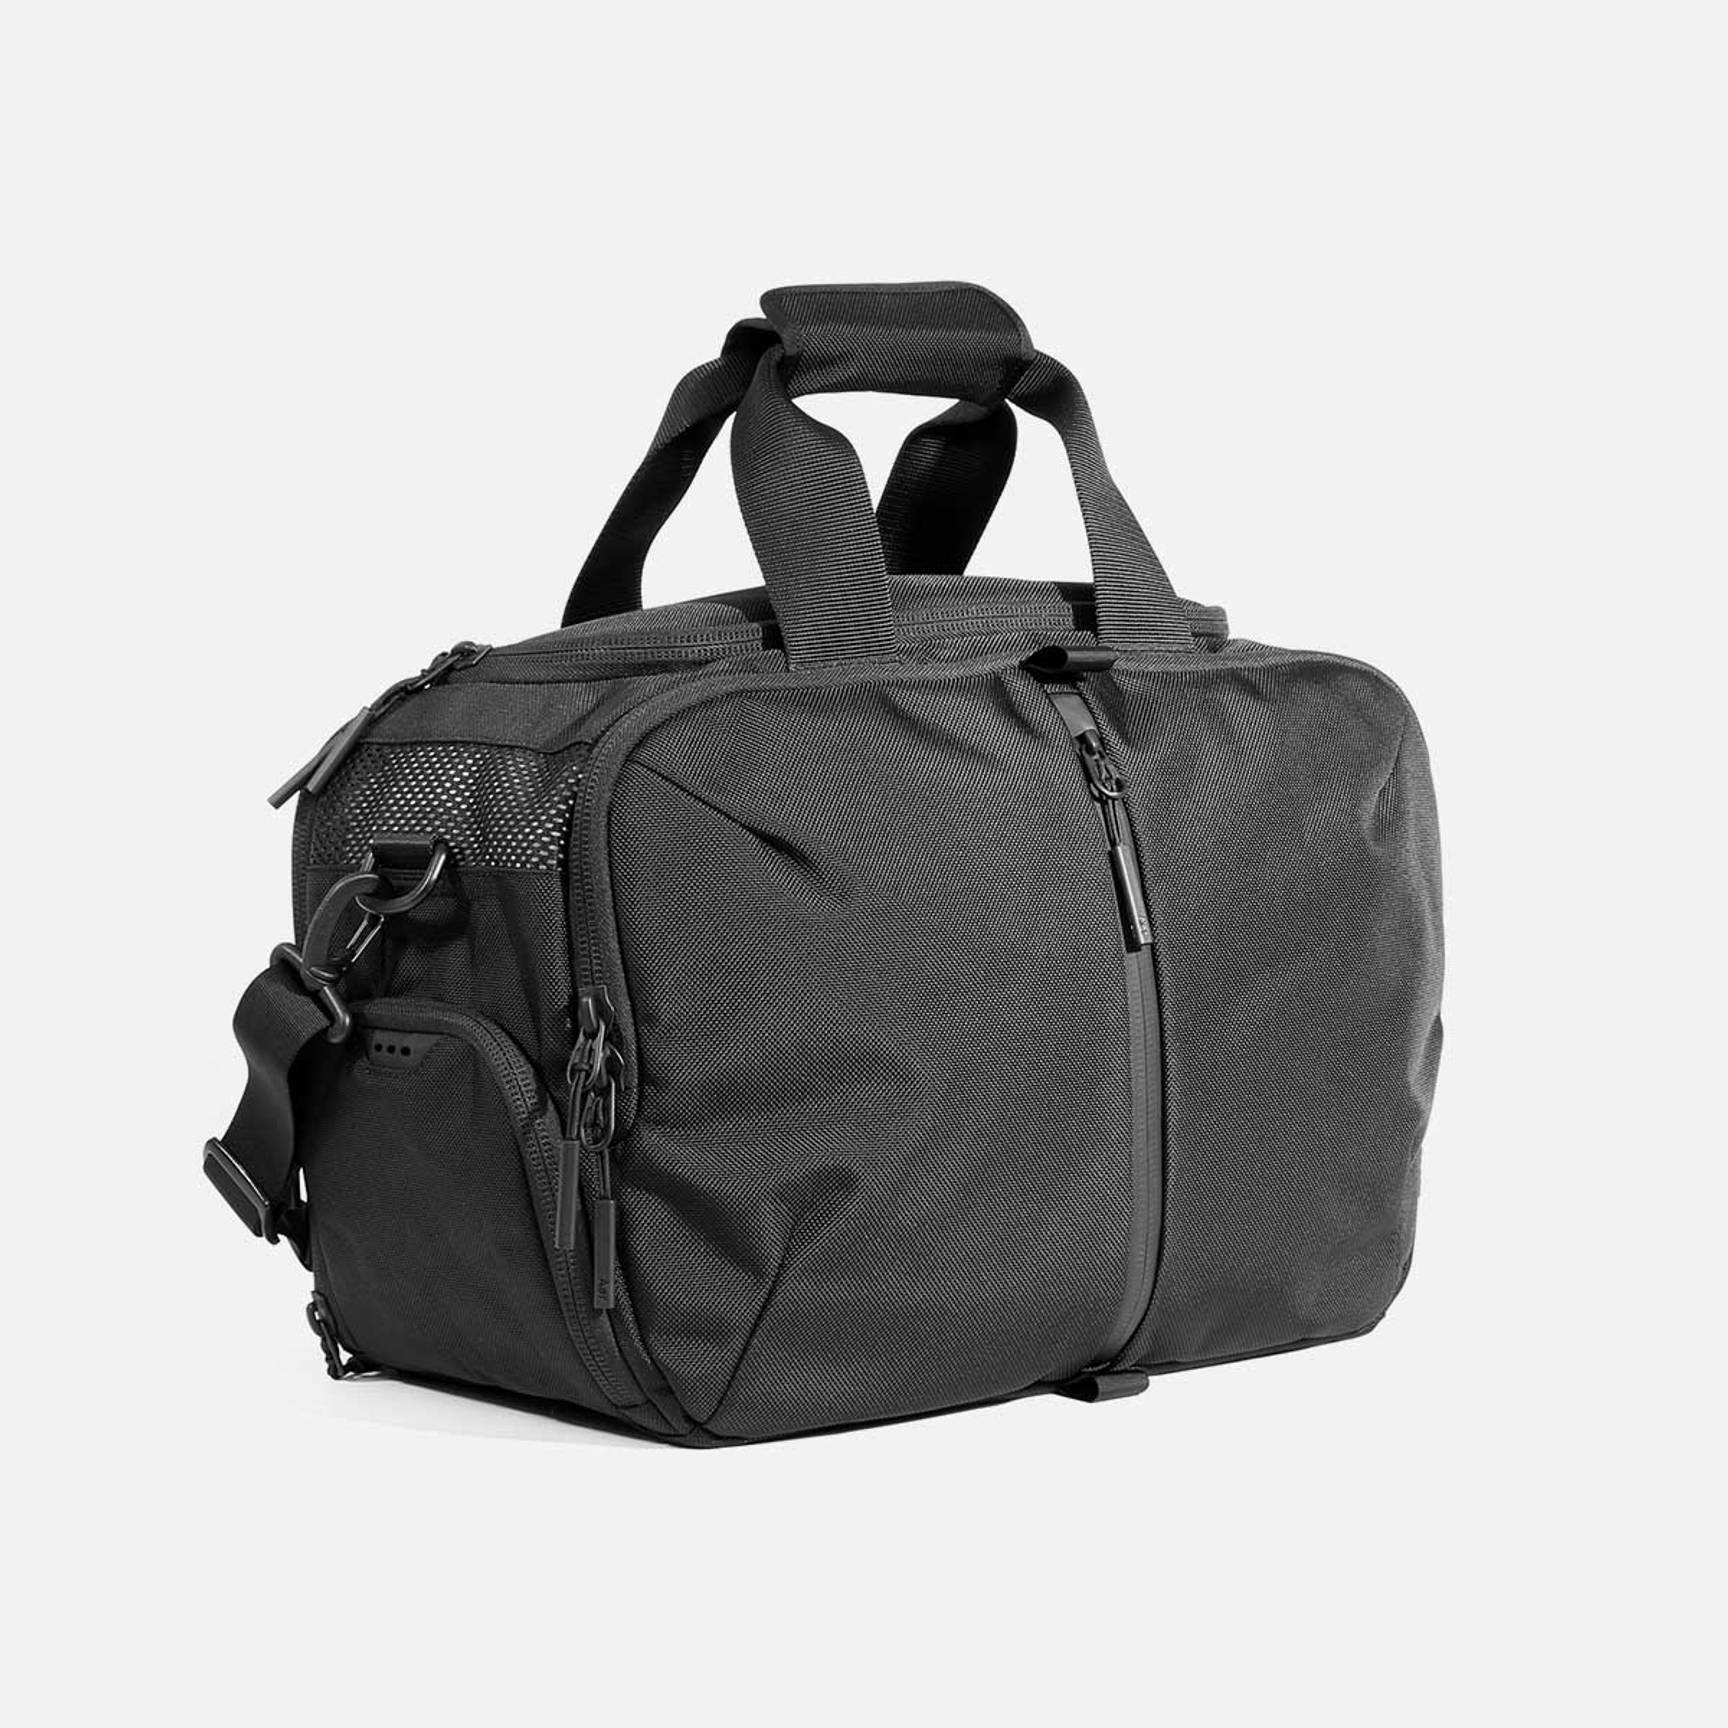 Dheera 16FT Large Gym Bag Gym Duffle Bag Gym Bag with Yoga Mat Holder for  Transporting Organizing(Green) 